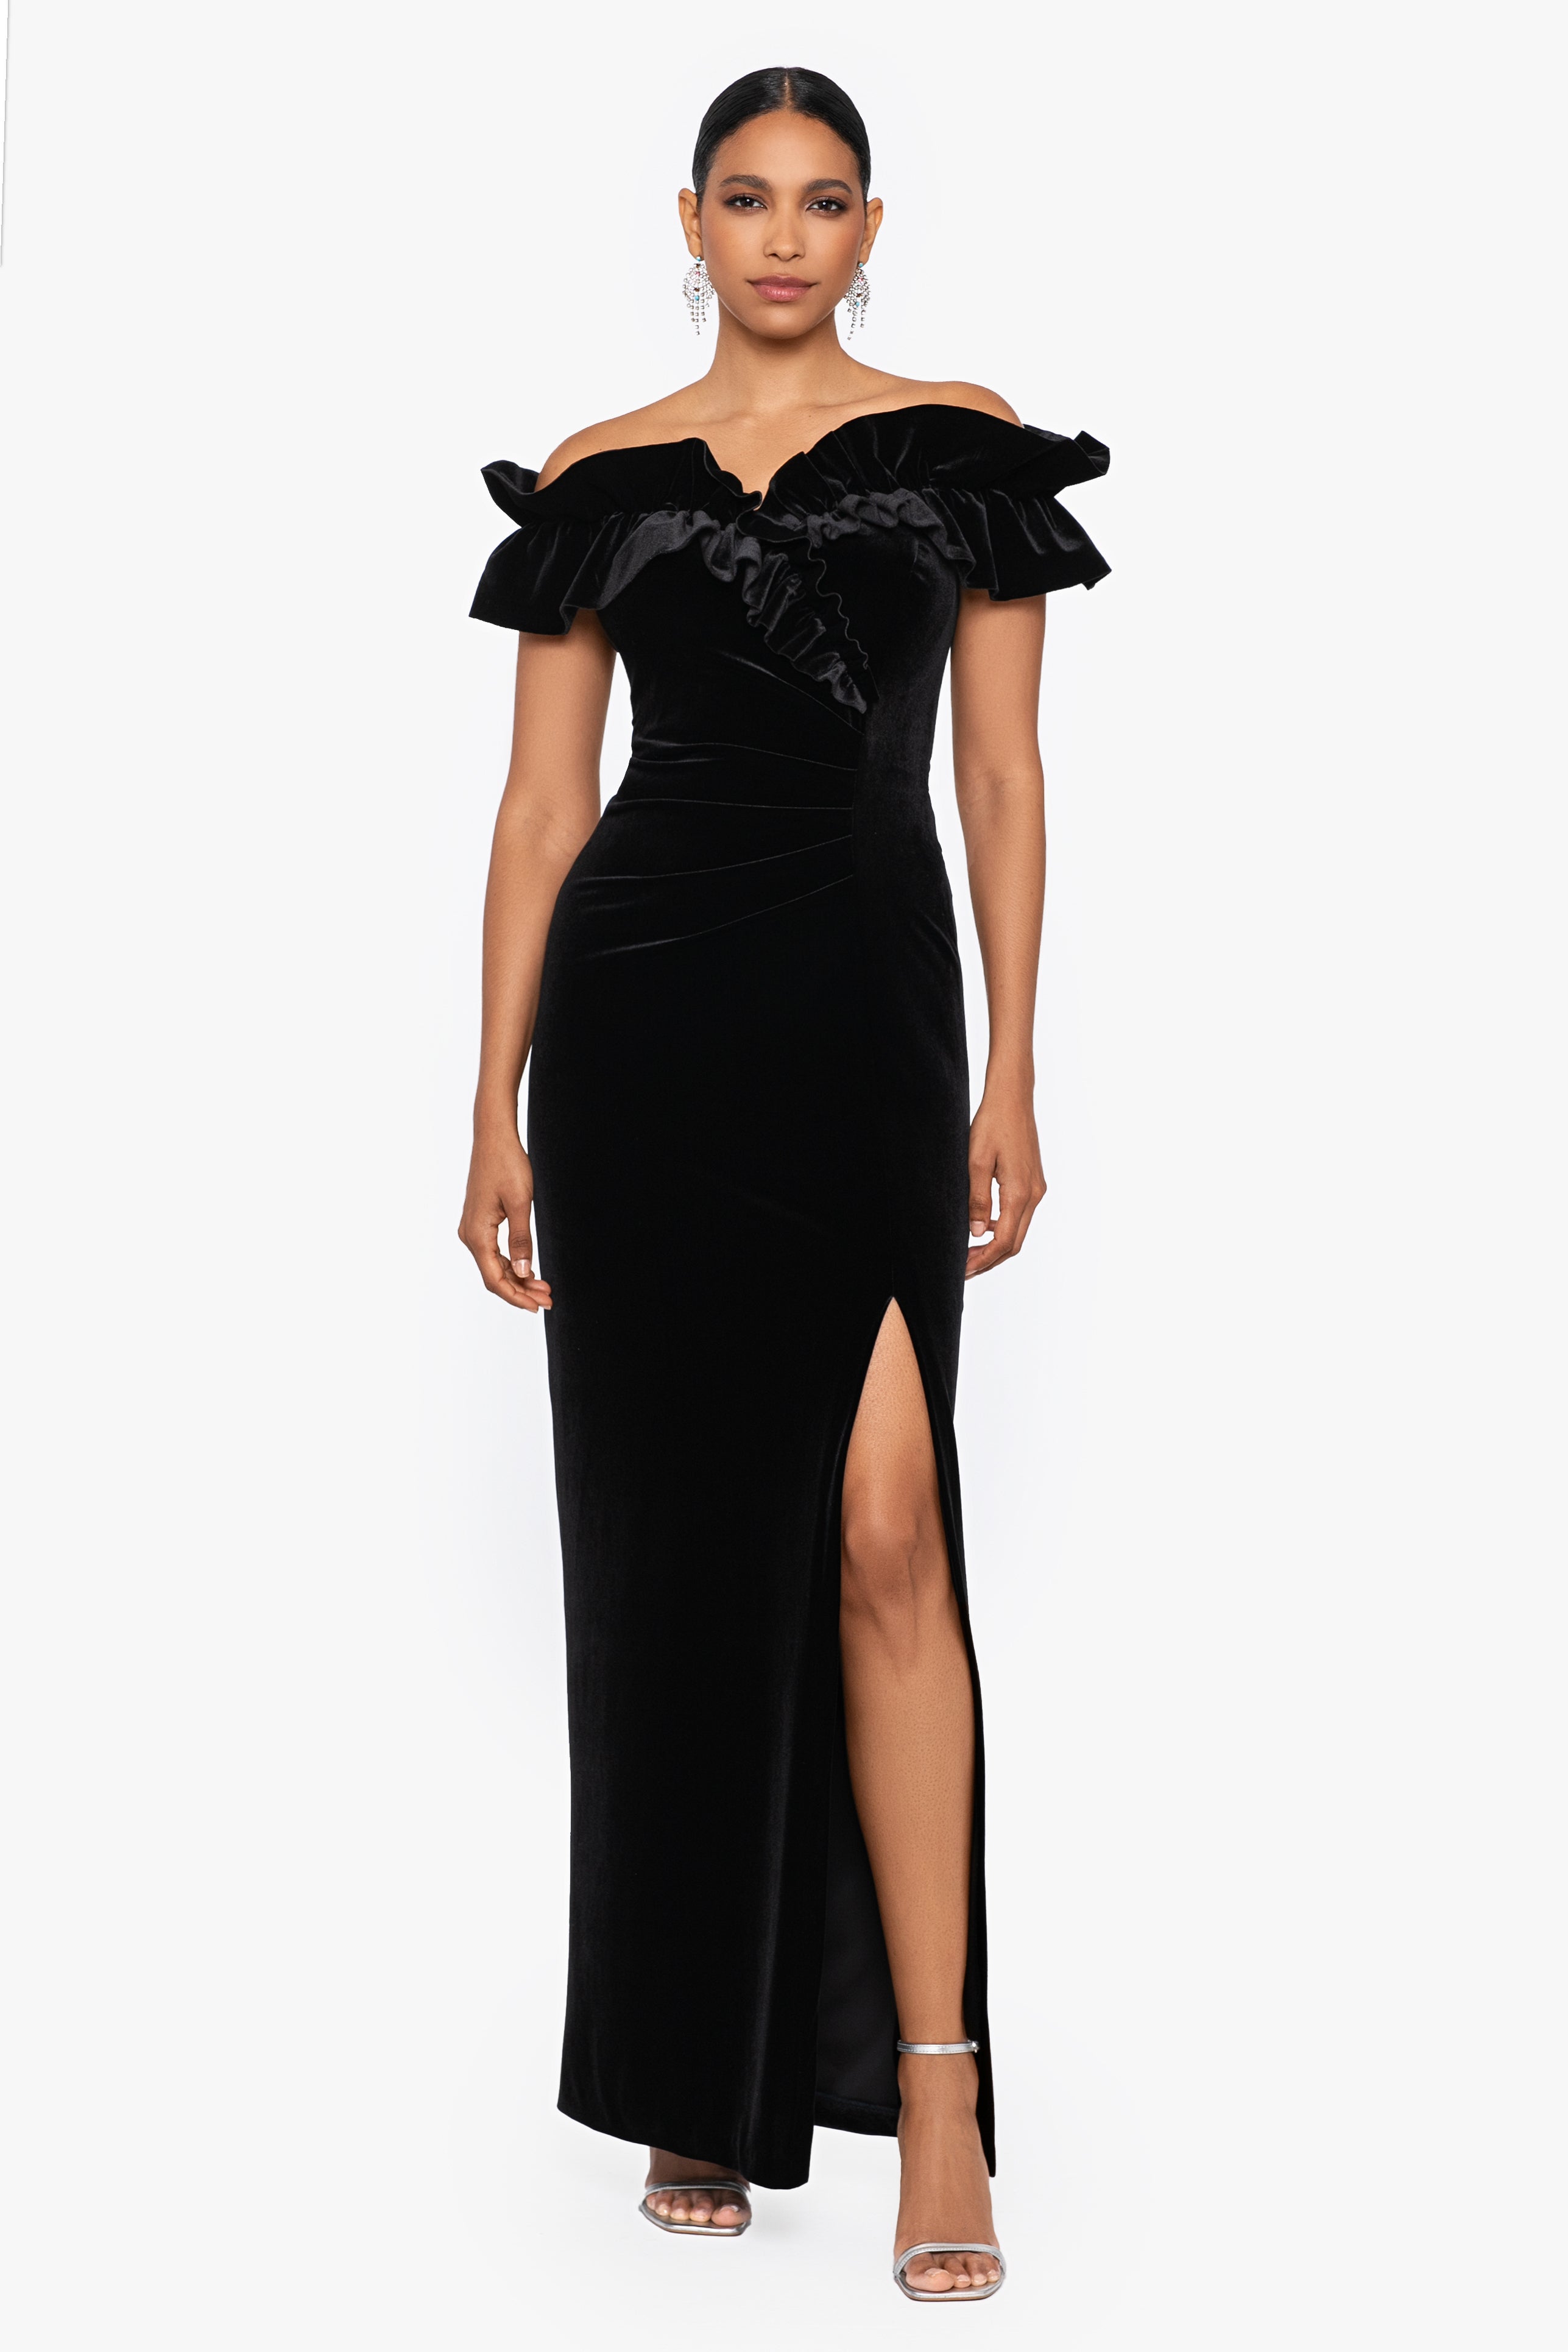 SAU LEE Harriet Velvet Gown Black Long Dress Crystals Party Wedding 0 NWOT  $675 | eBay